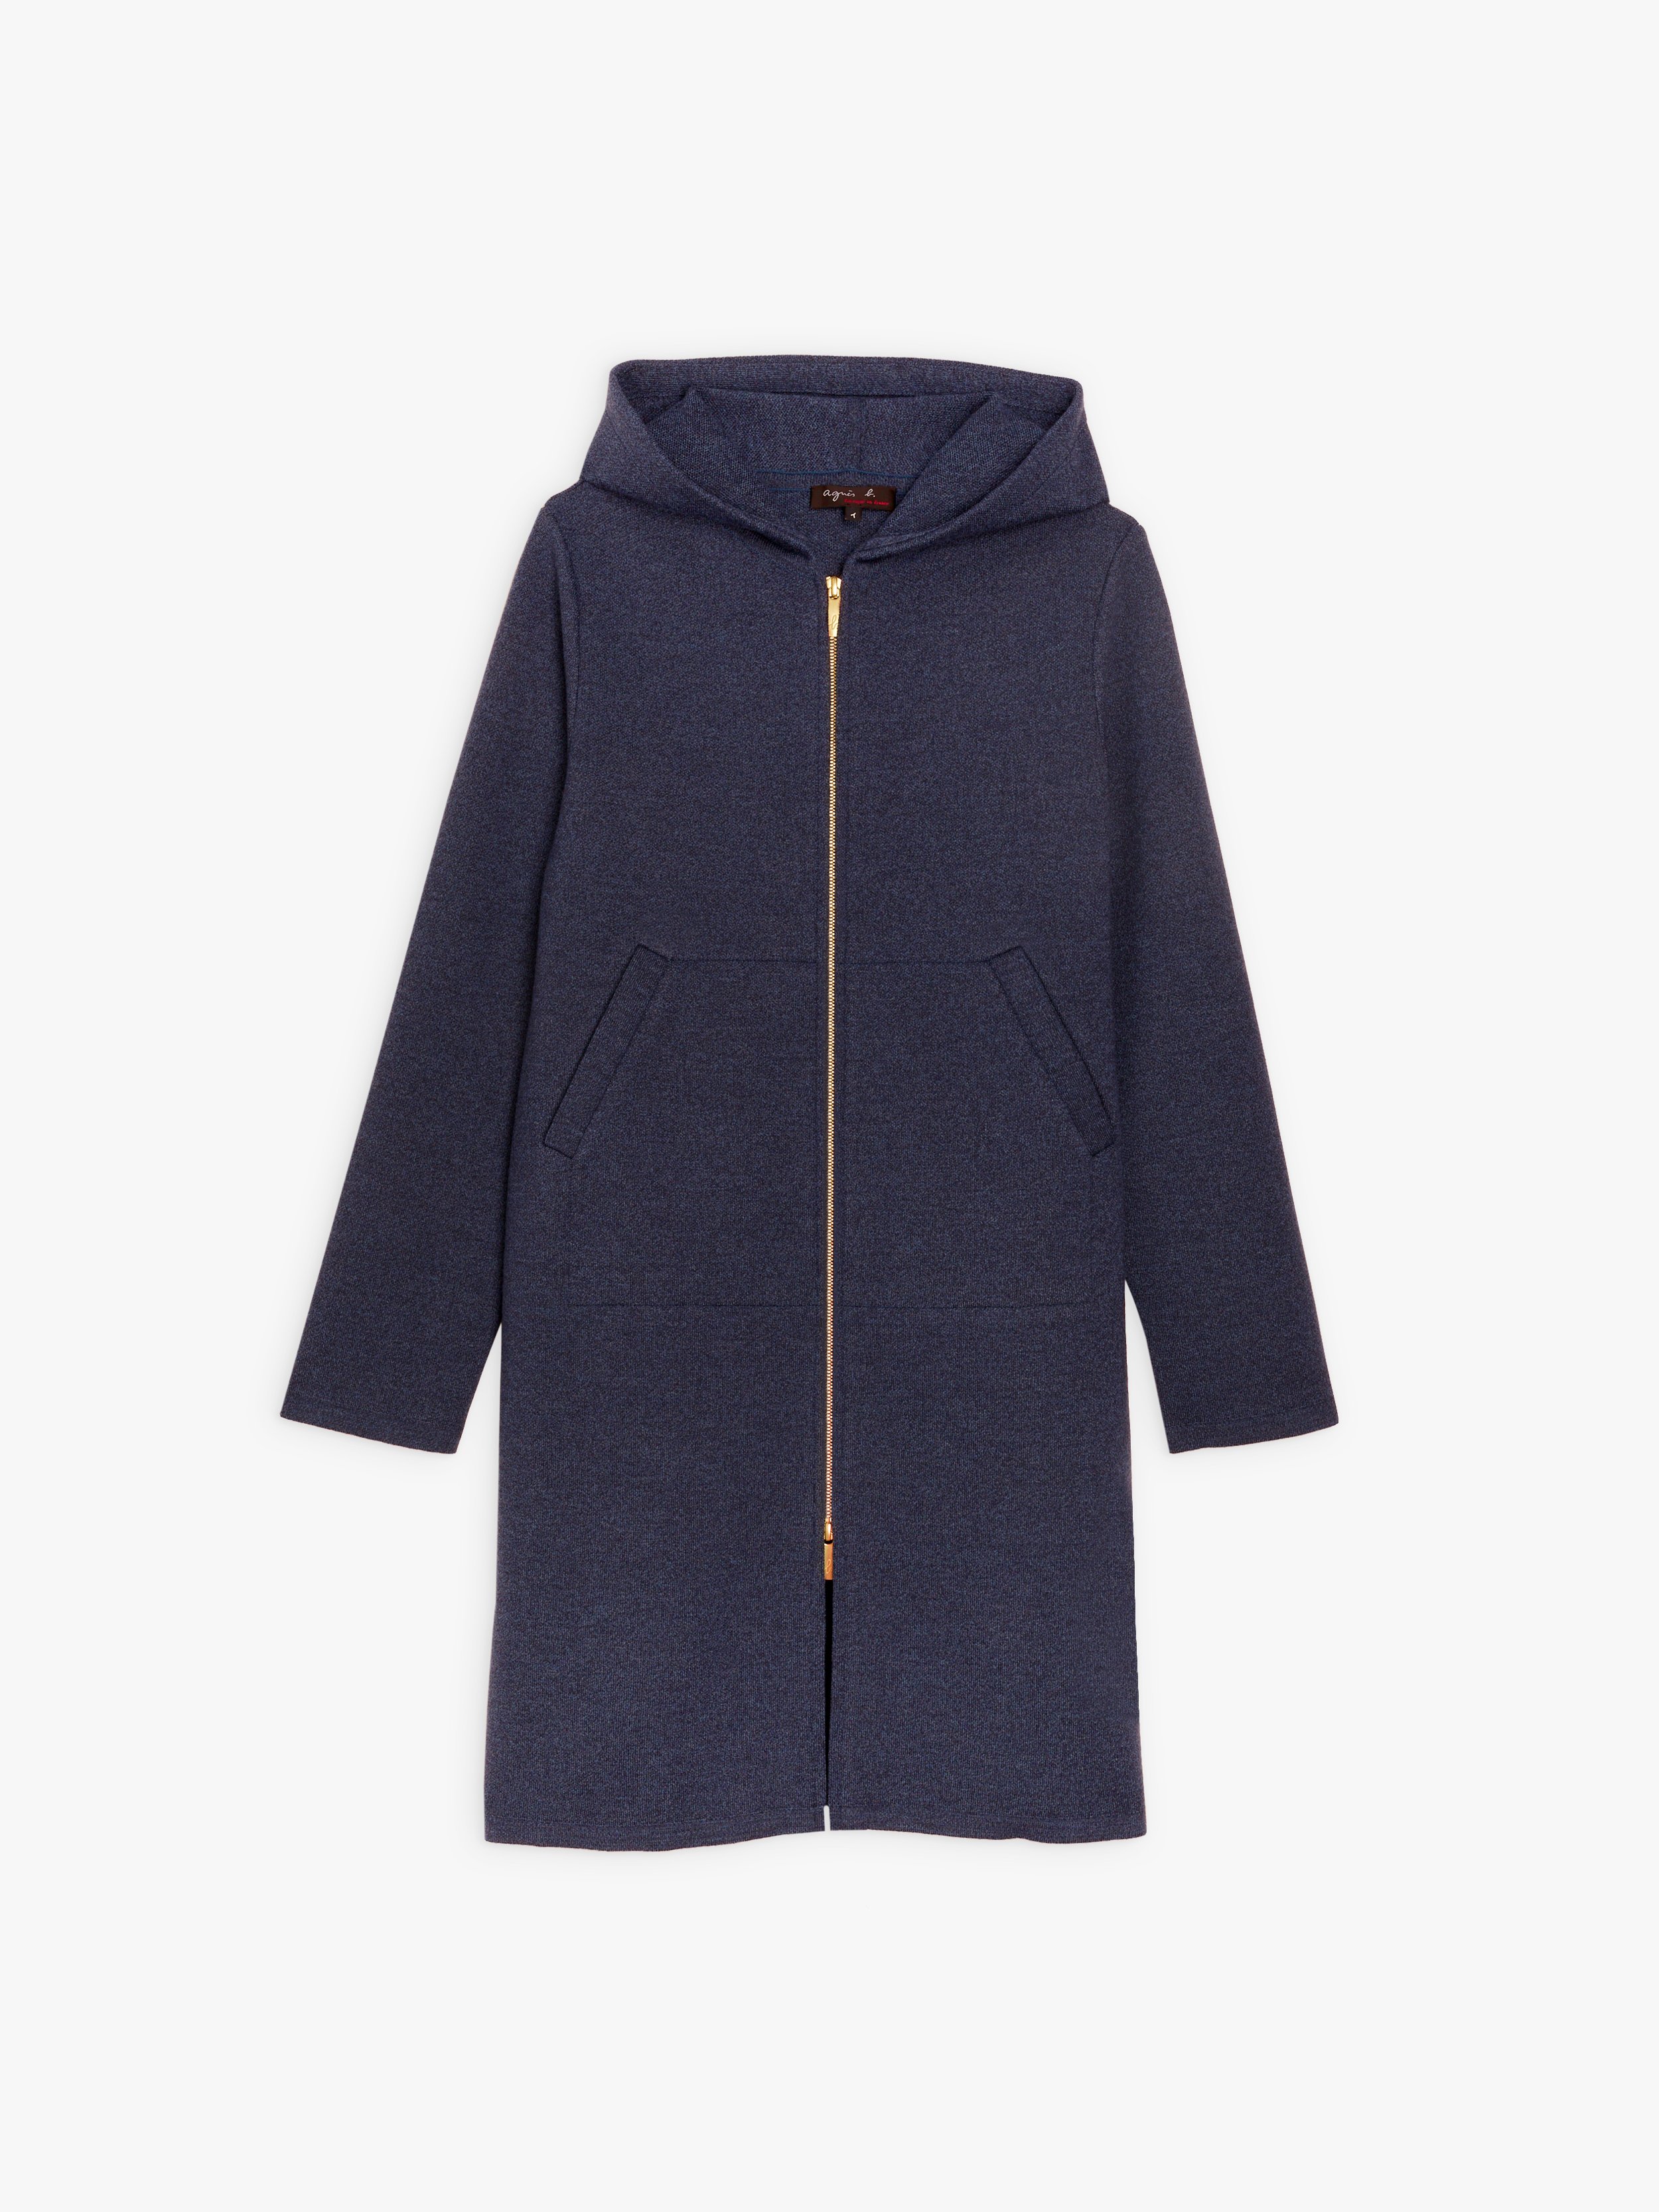 hooded overcoat with zip in merino wool | agnès b.